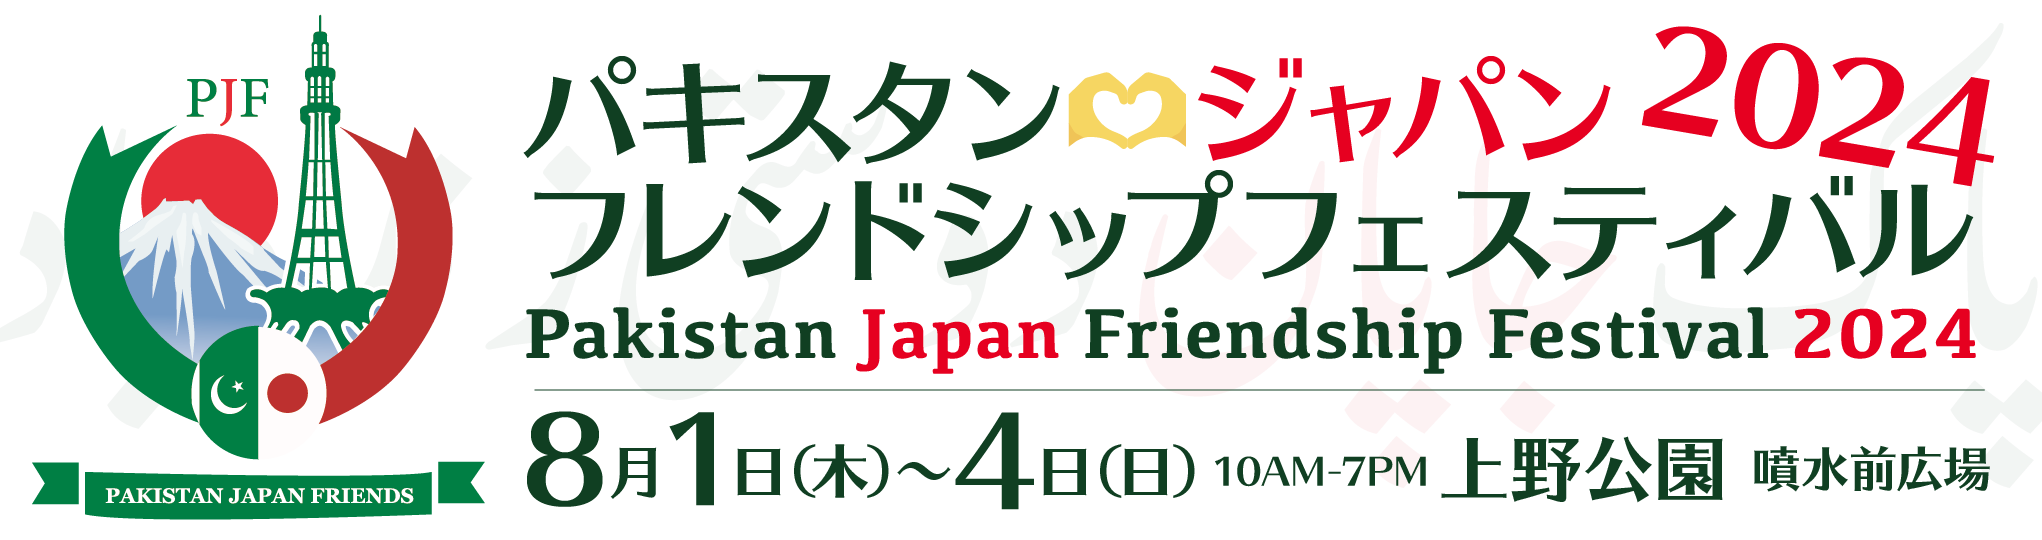 Pakistan Japan Friendship Festival 2024